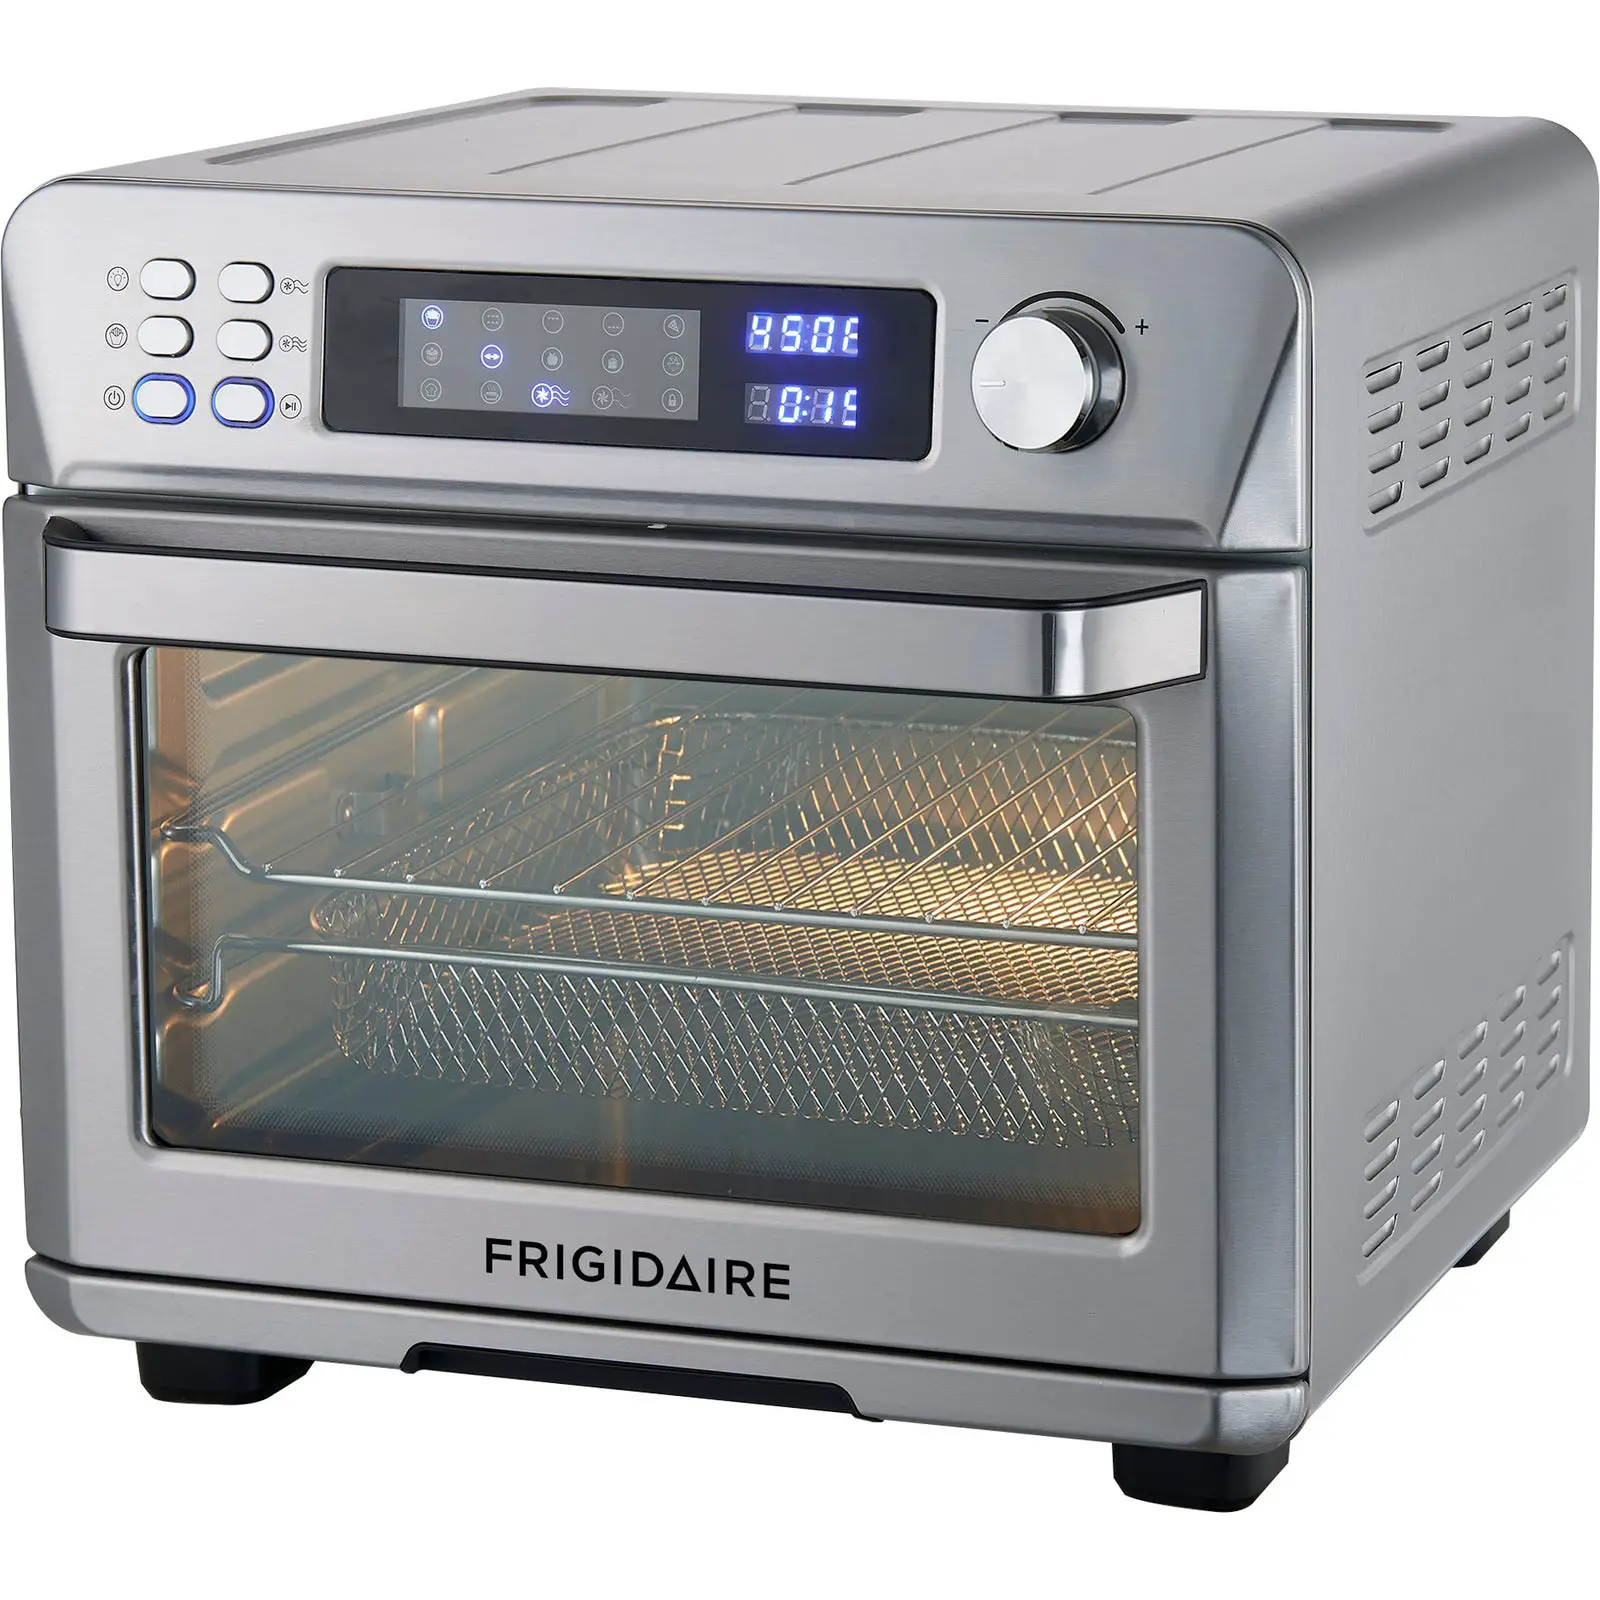 Frigidaire 25L Digital Air Fryer Oven